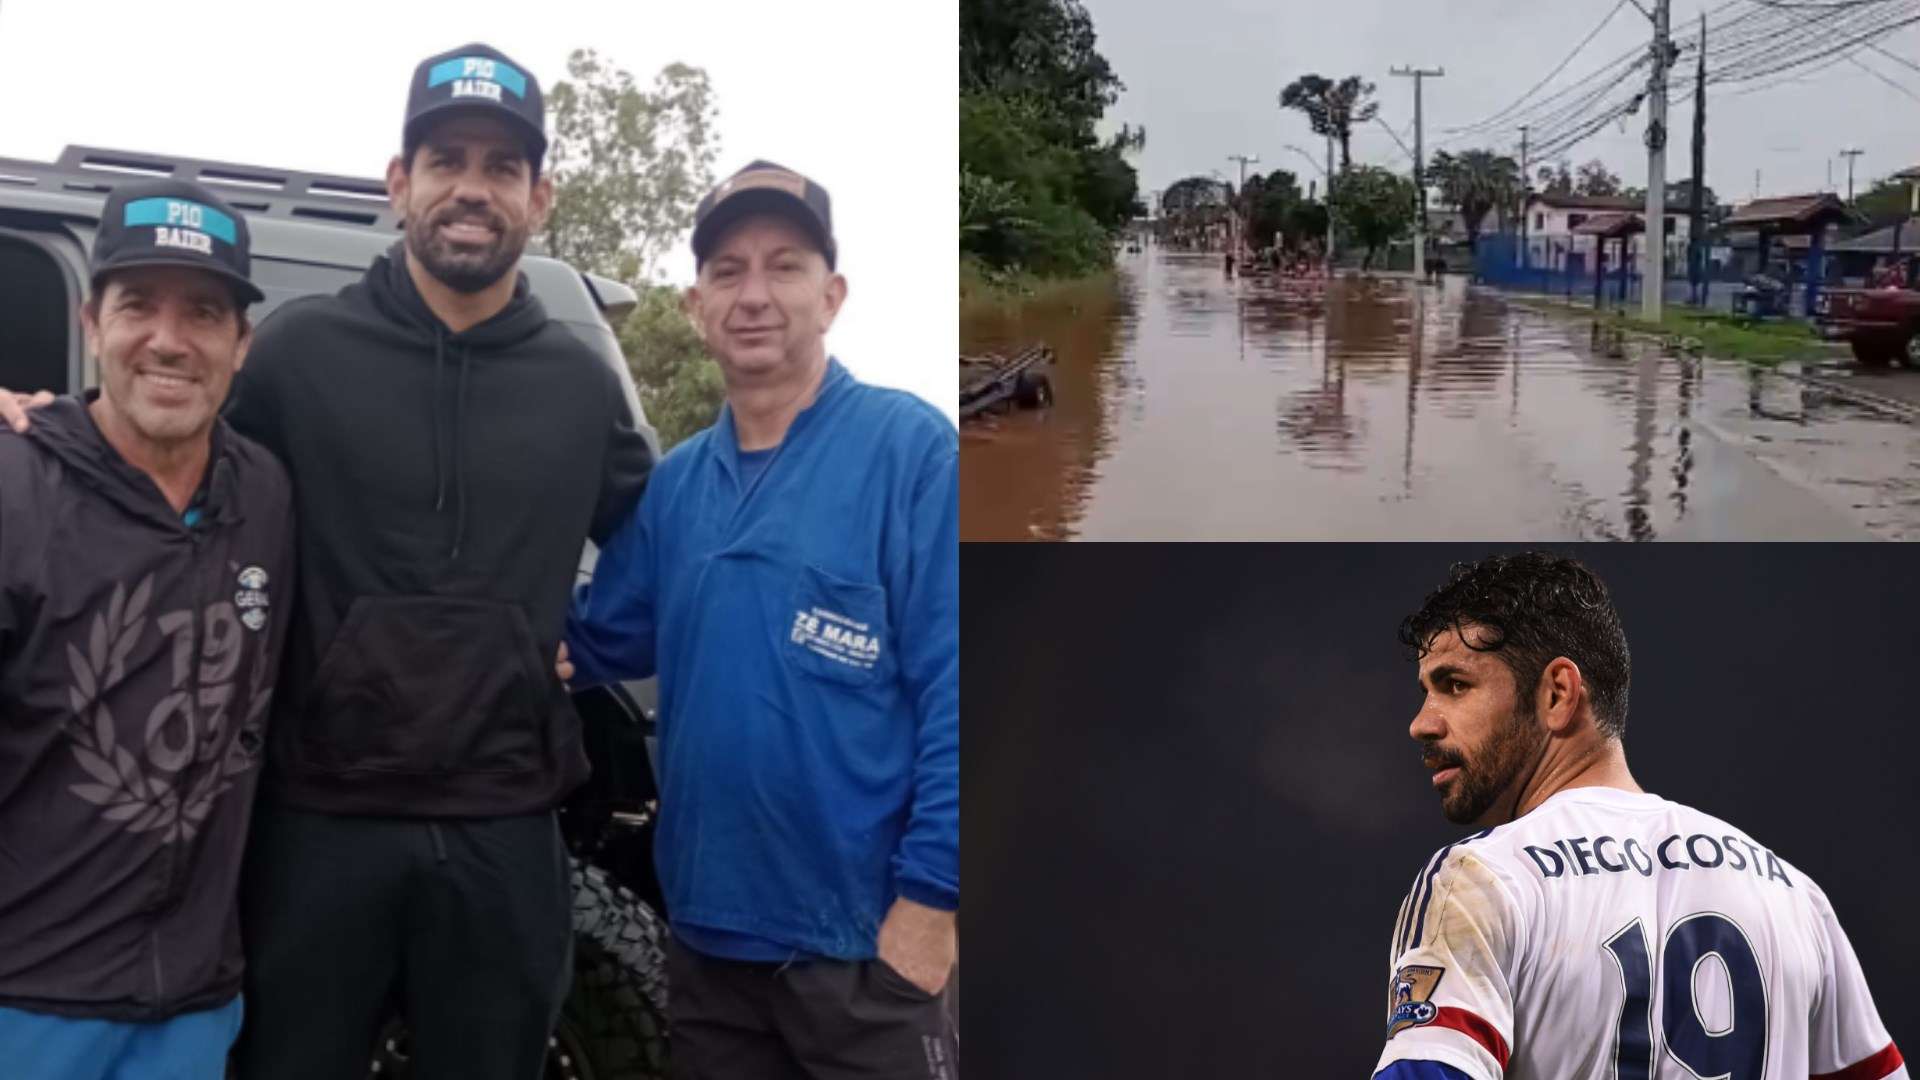 Diego-Costa-Brazil-floods-Chelsea